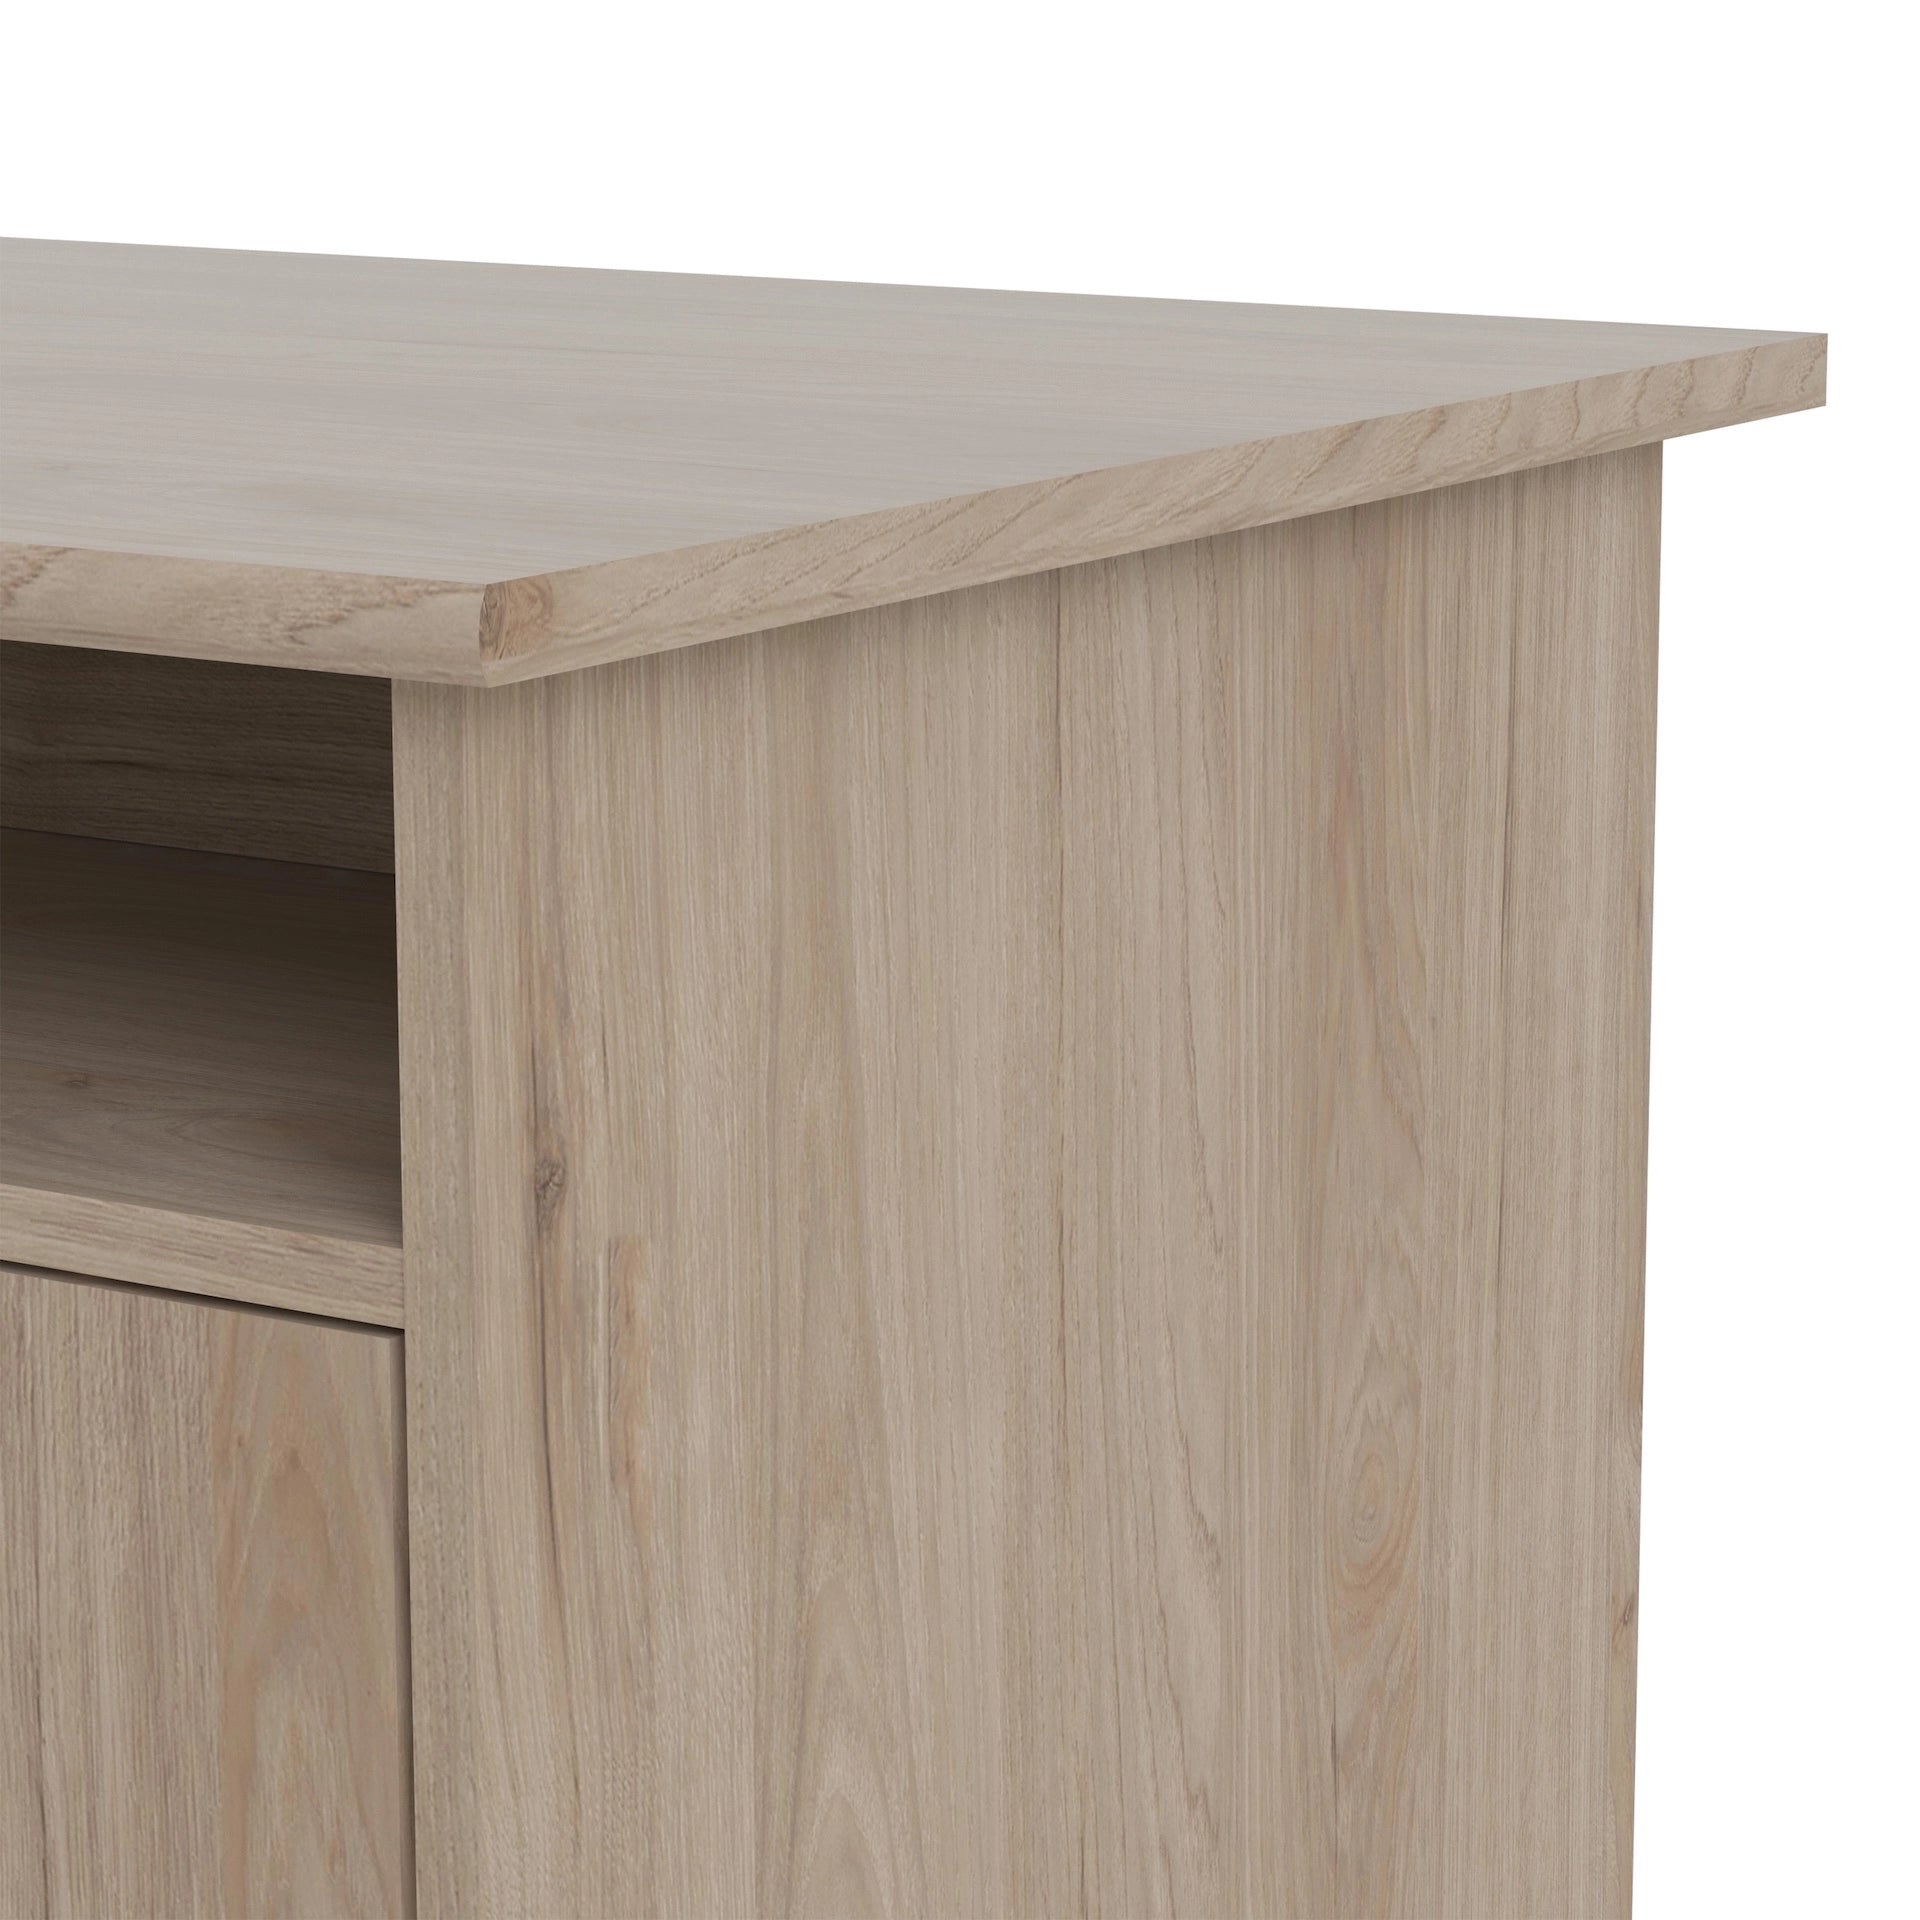 Furniture To Go Function Plus Desk 4 Drawer 1 Door in Jackson Hickory Oak